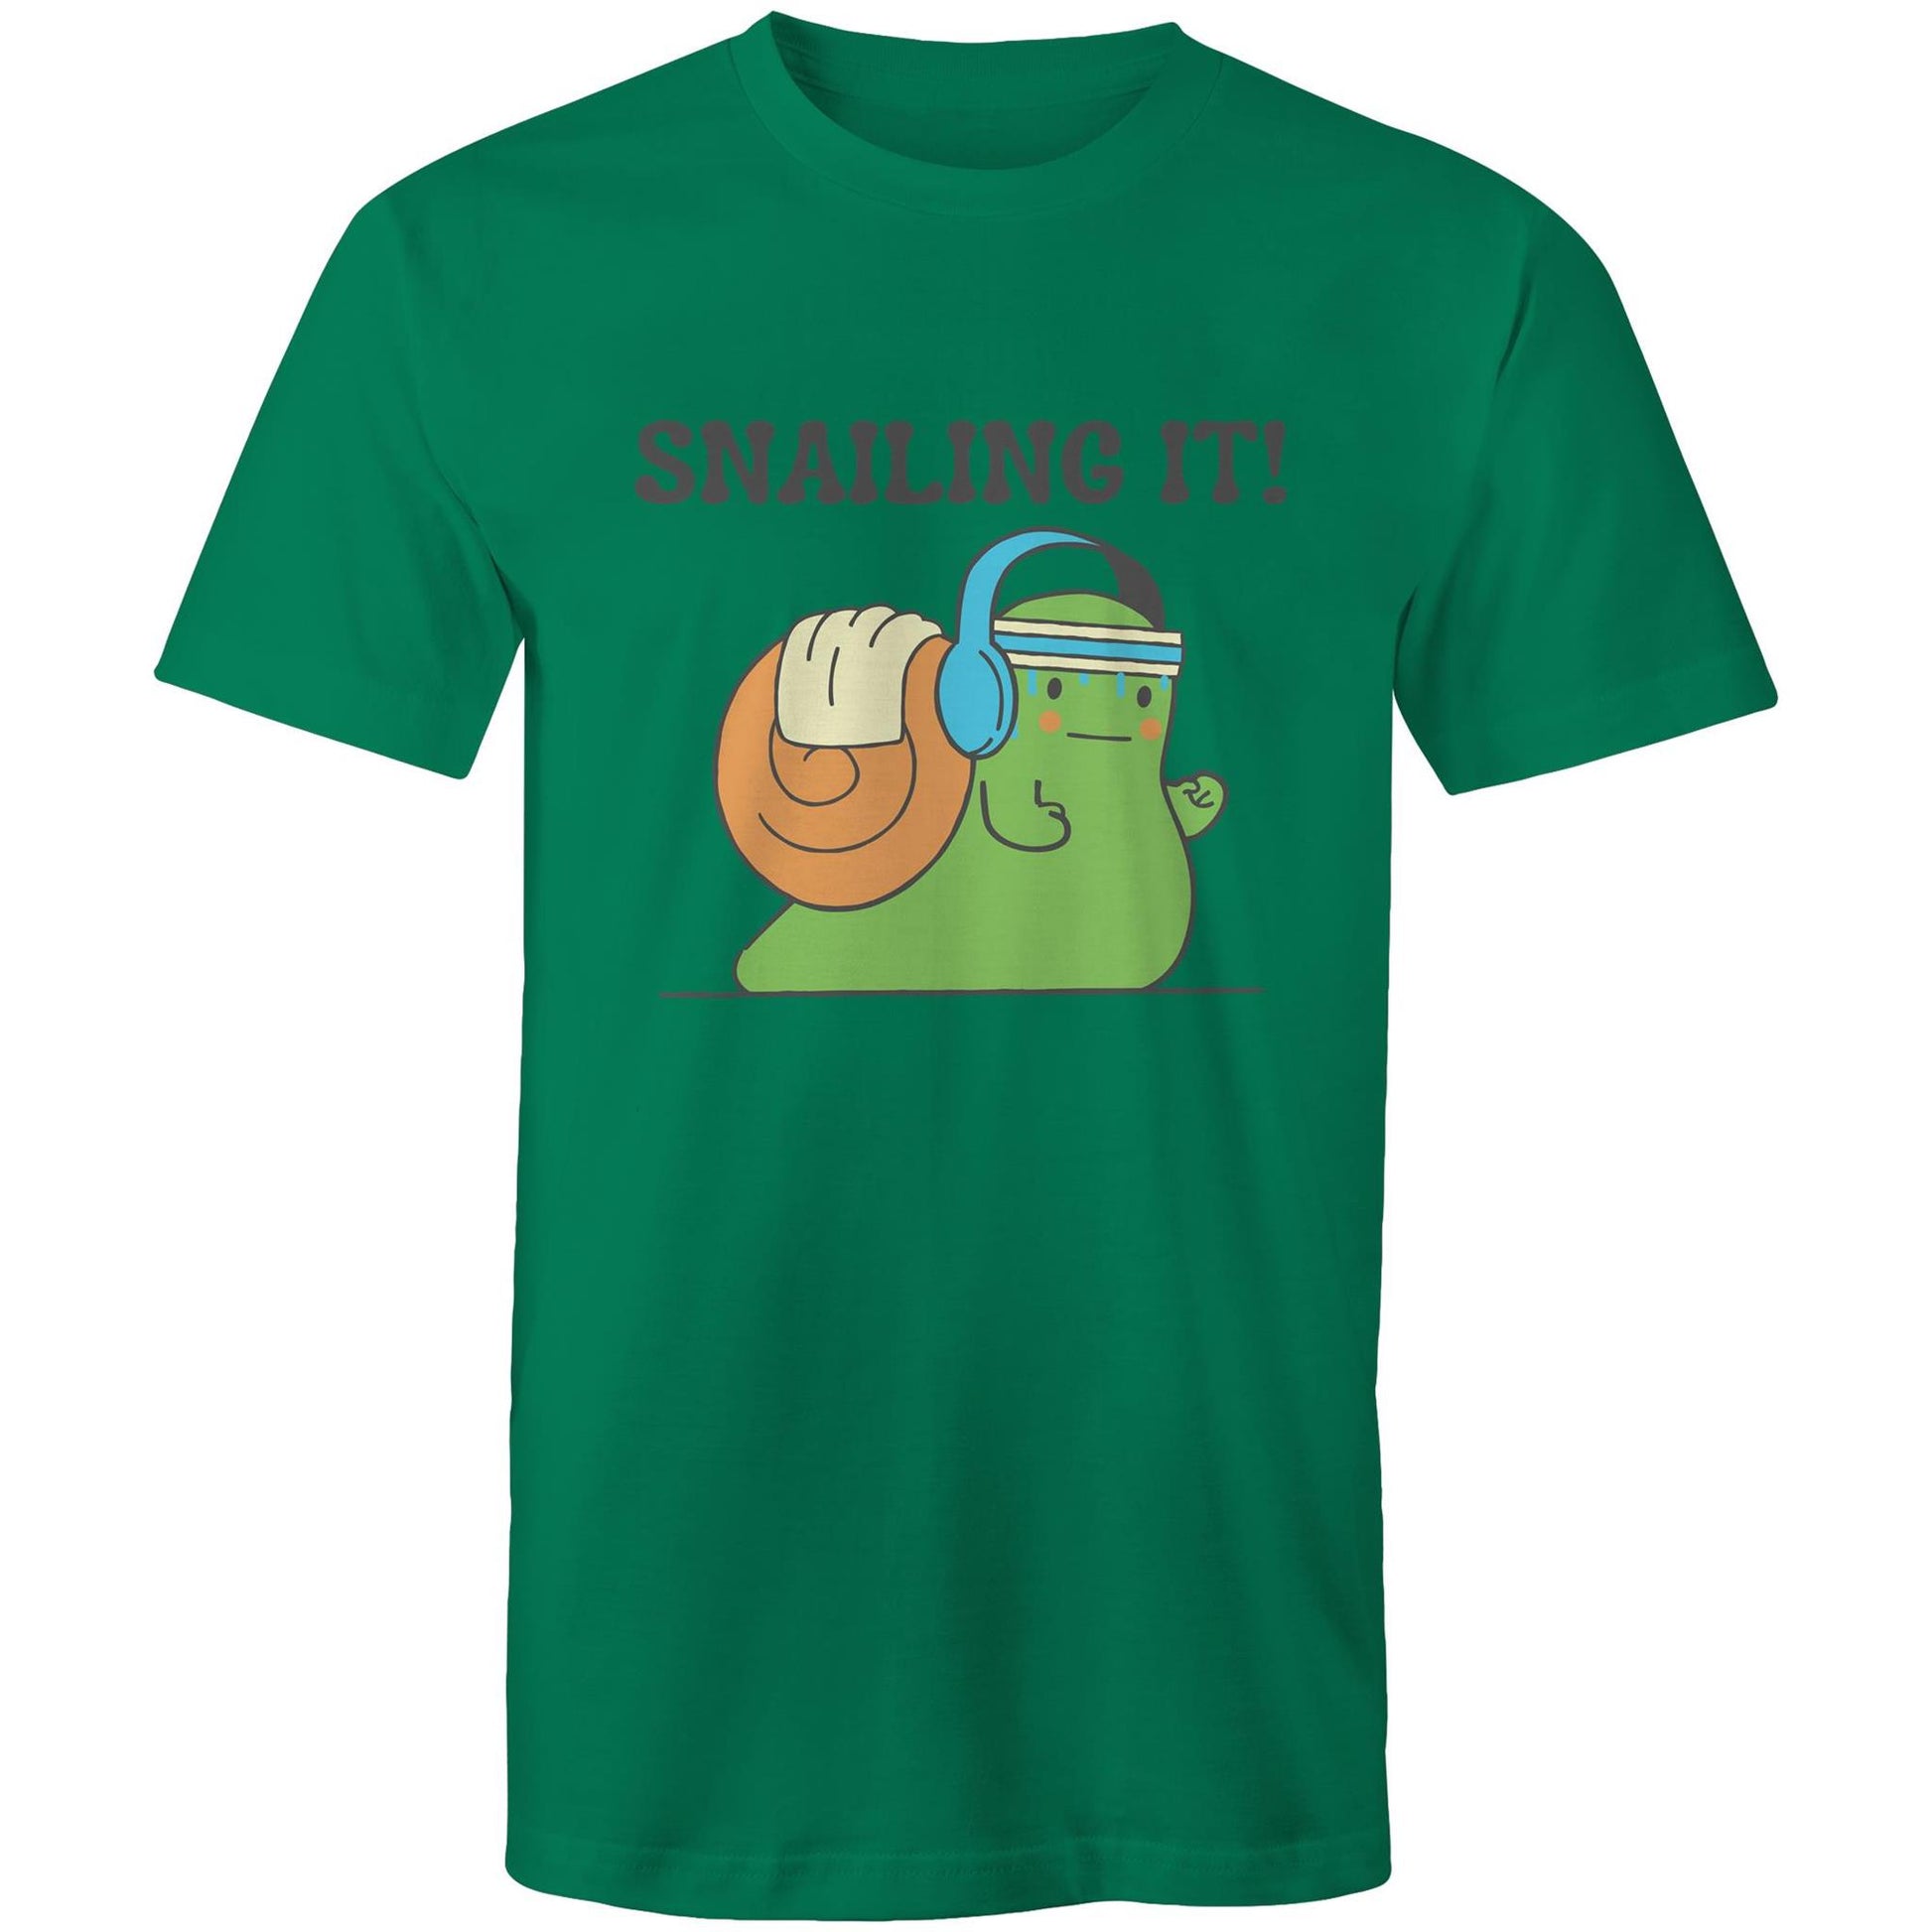 Snailing It - Short Sleeve T-shirt Kelly Green Fitness T-shirt